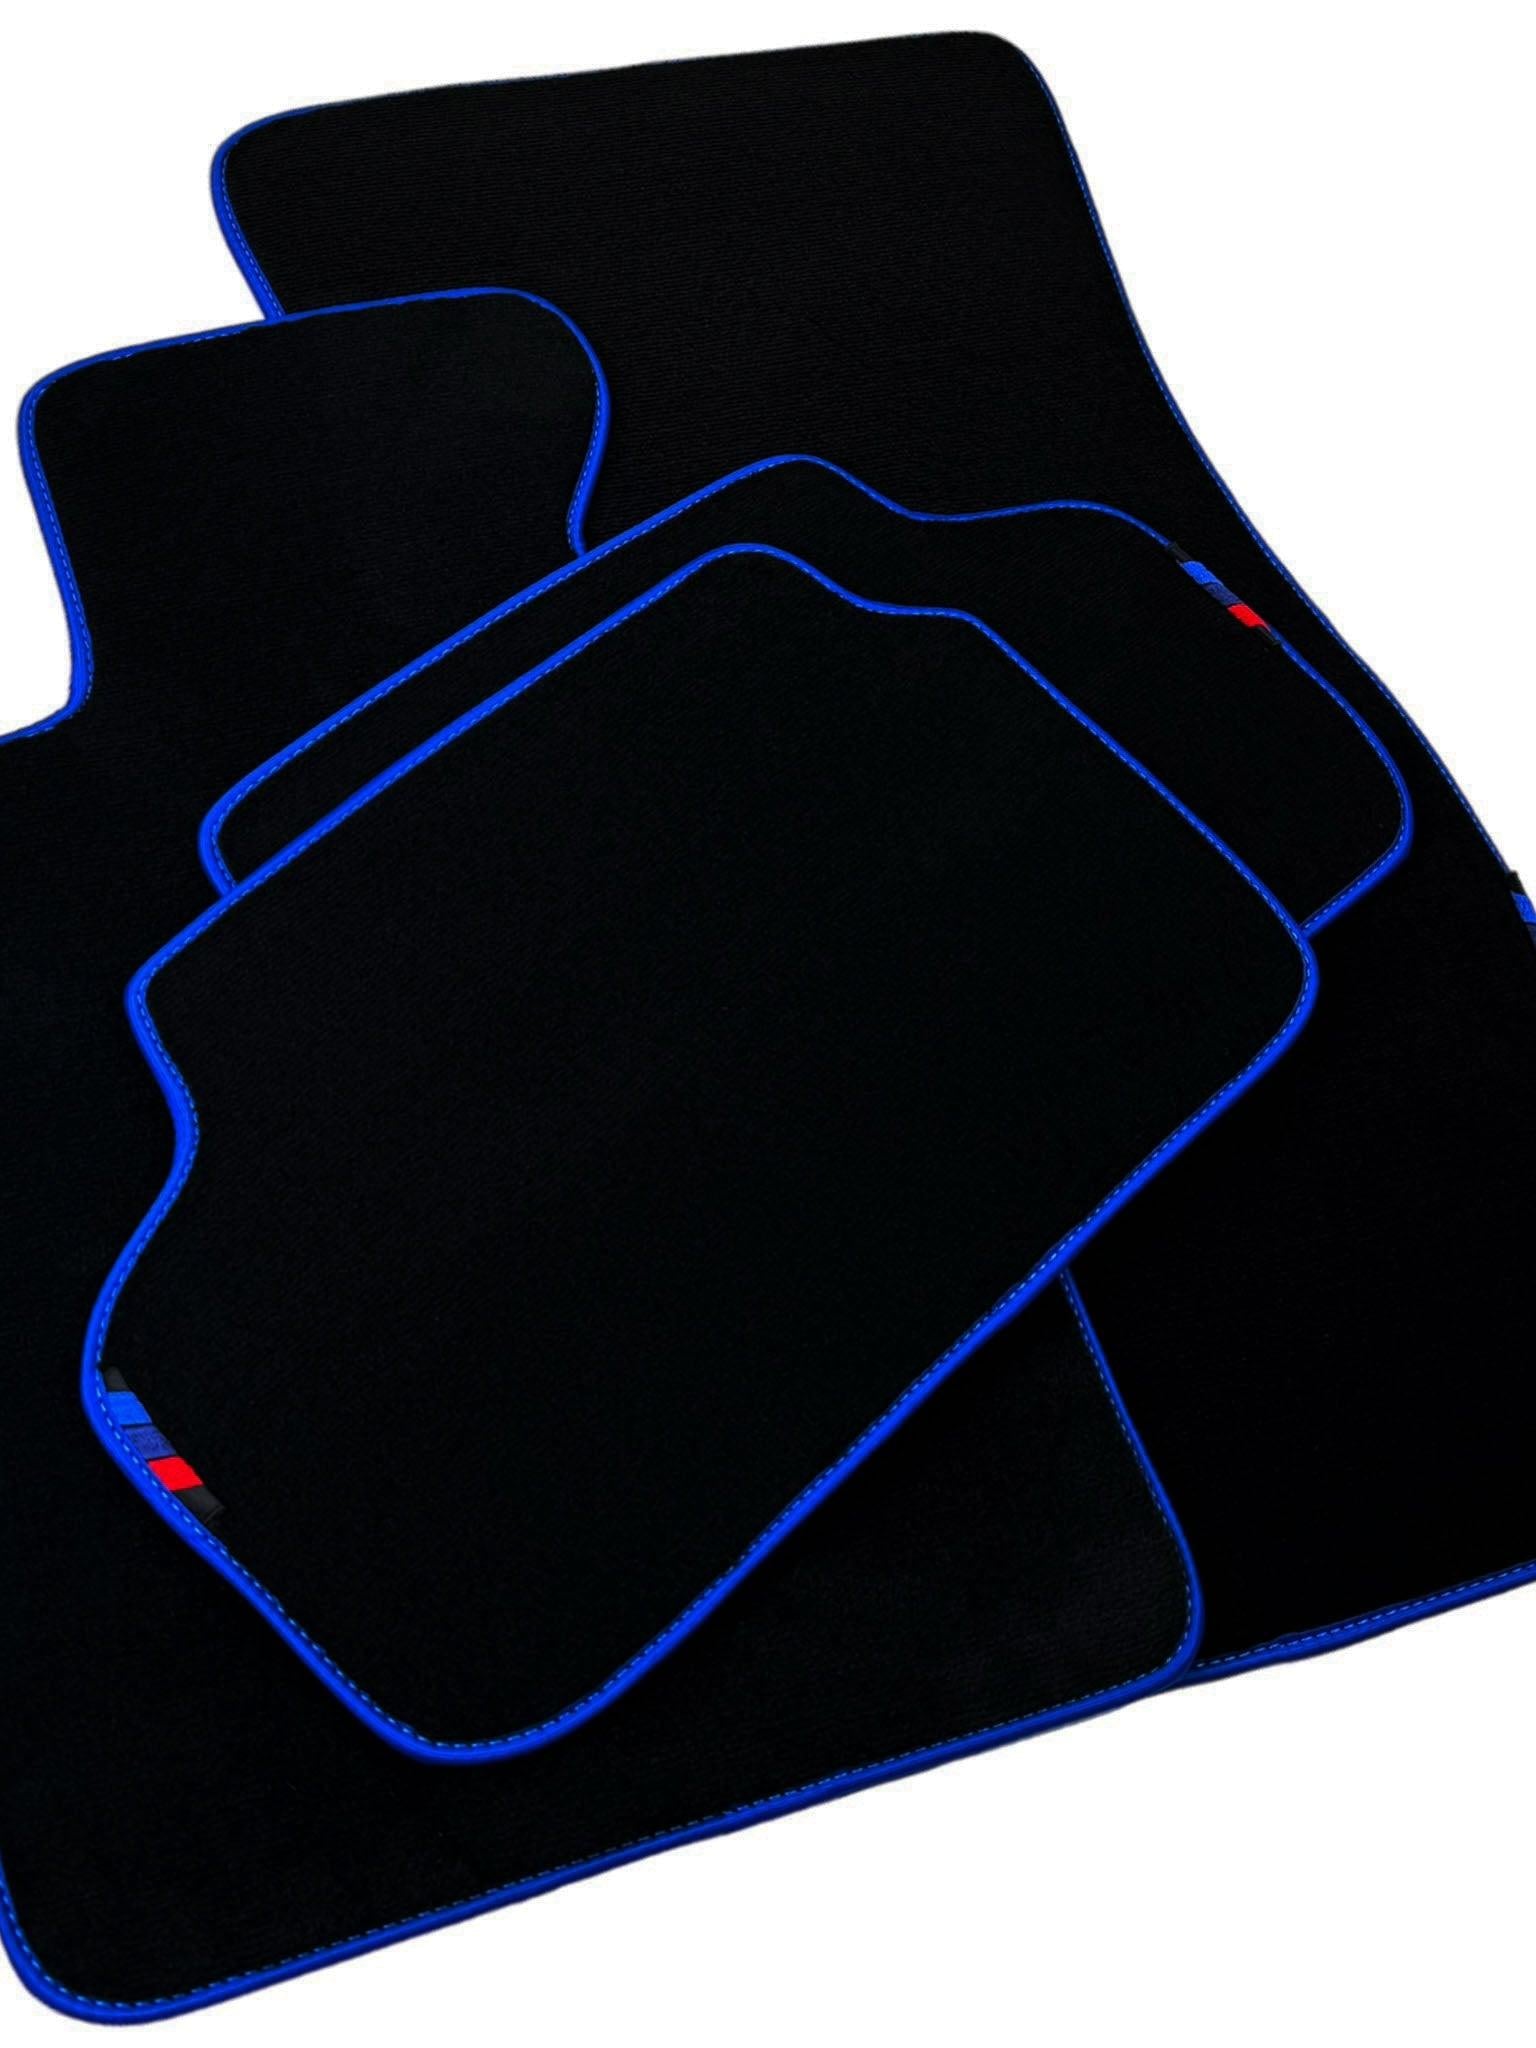 Black Floor Floor Mats For BMW X6 Series E71 | Blue Trim